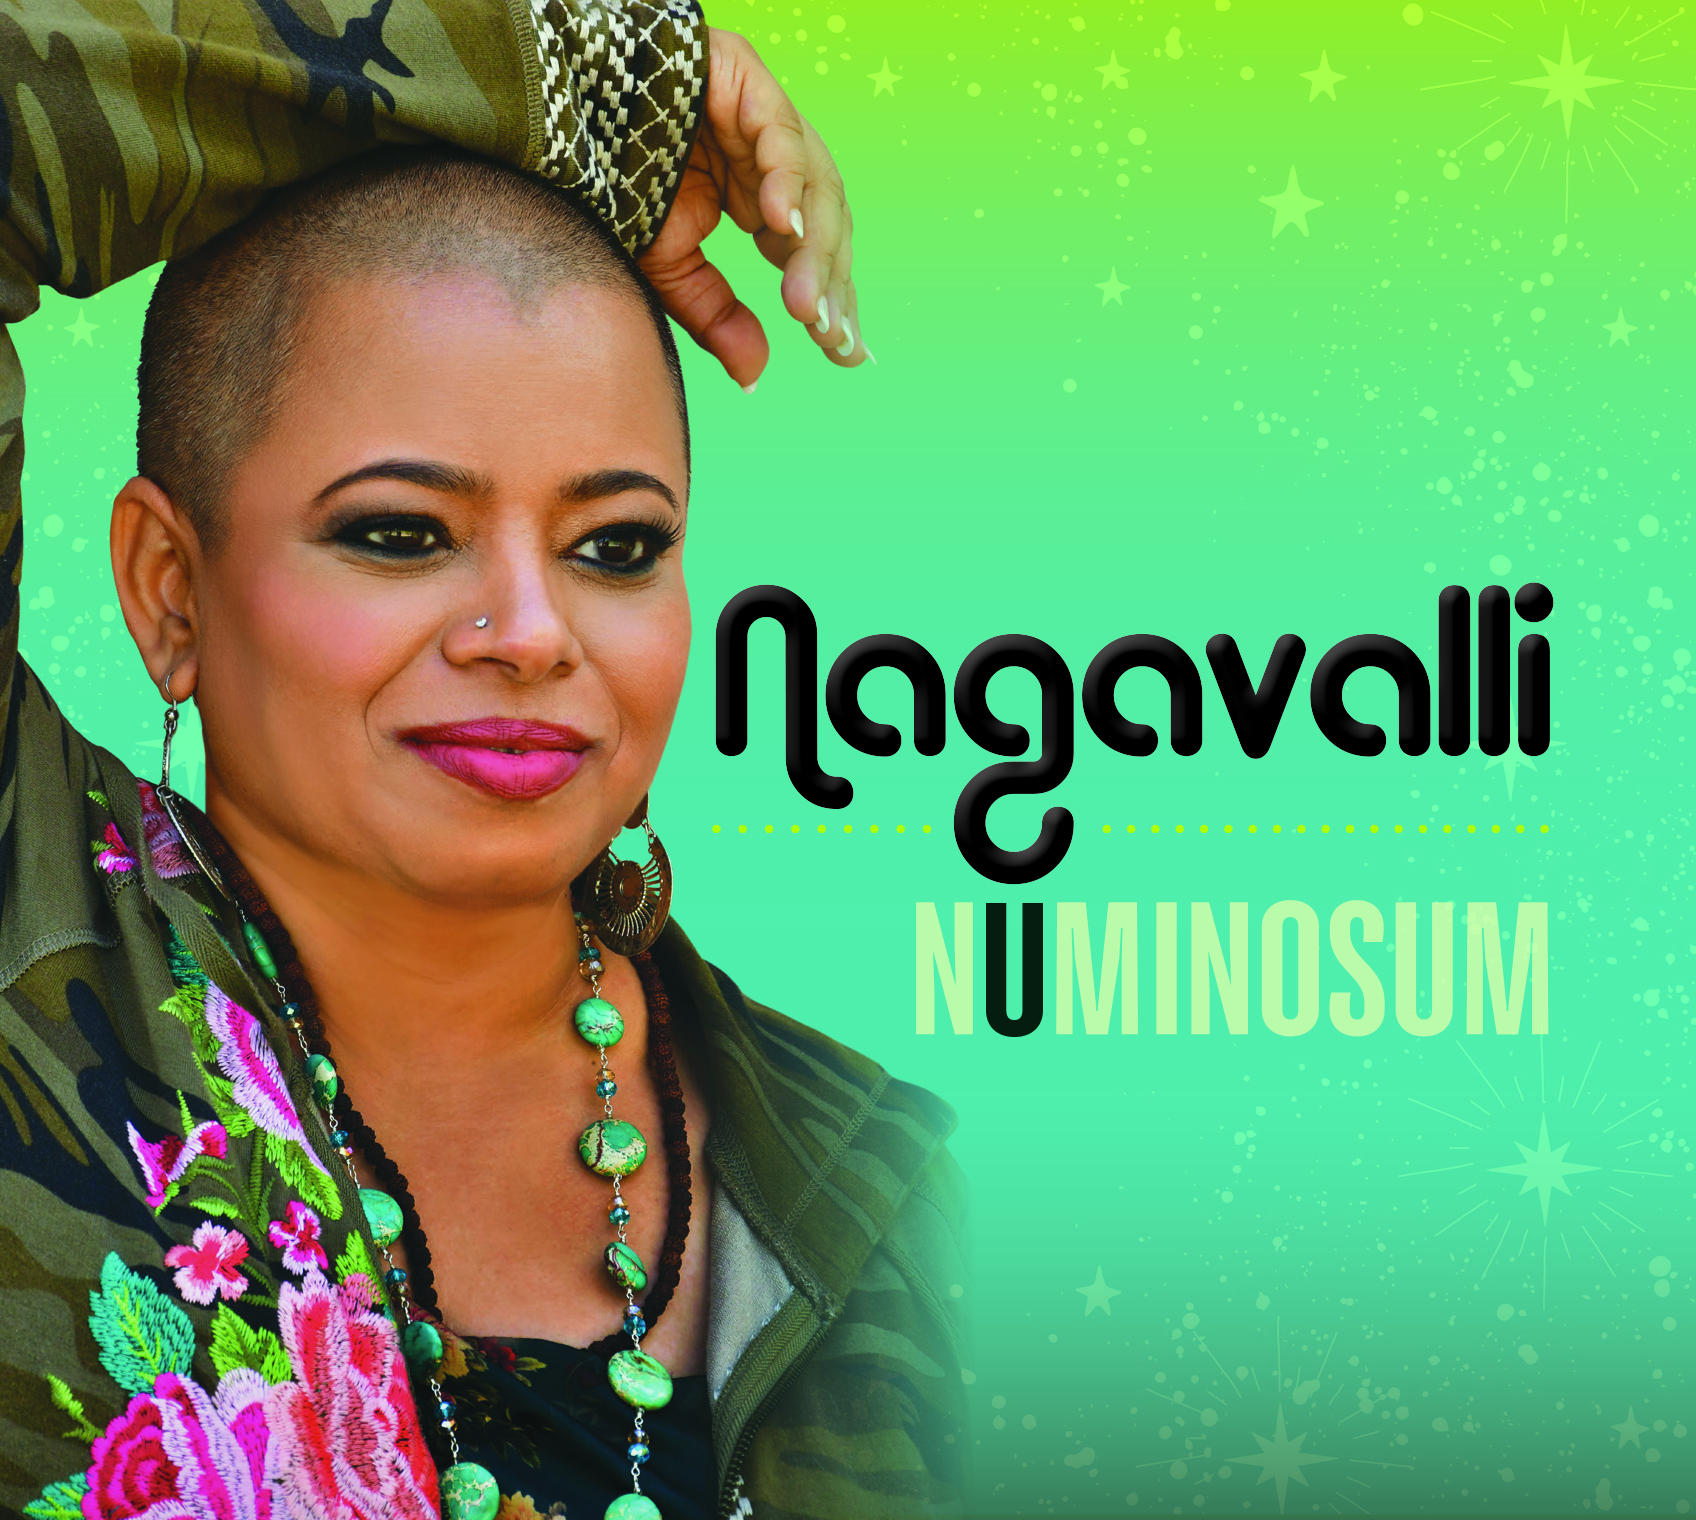 AUSTIN-BASED EASTERN SOUL MUSICIAN NAGAVALLI ANNOUNCES NEW ALBUM ‘NUMINOSUM’ DROPPING FEB. 10 